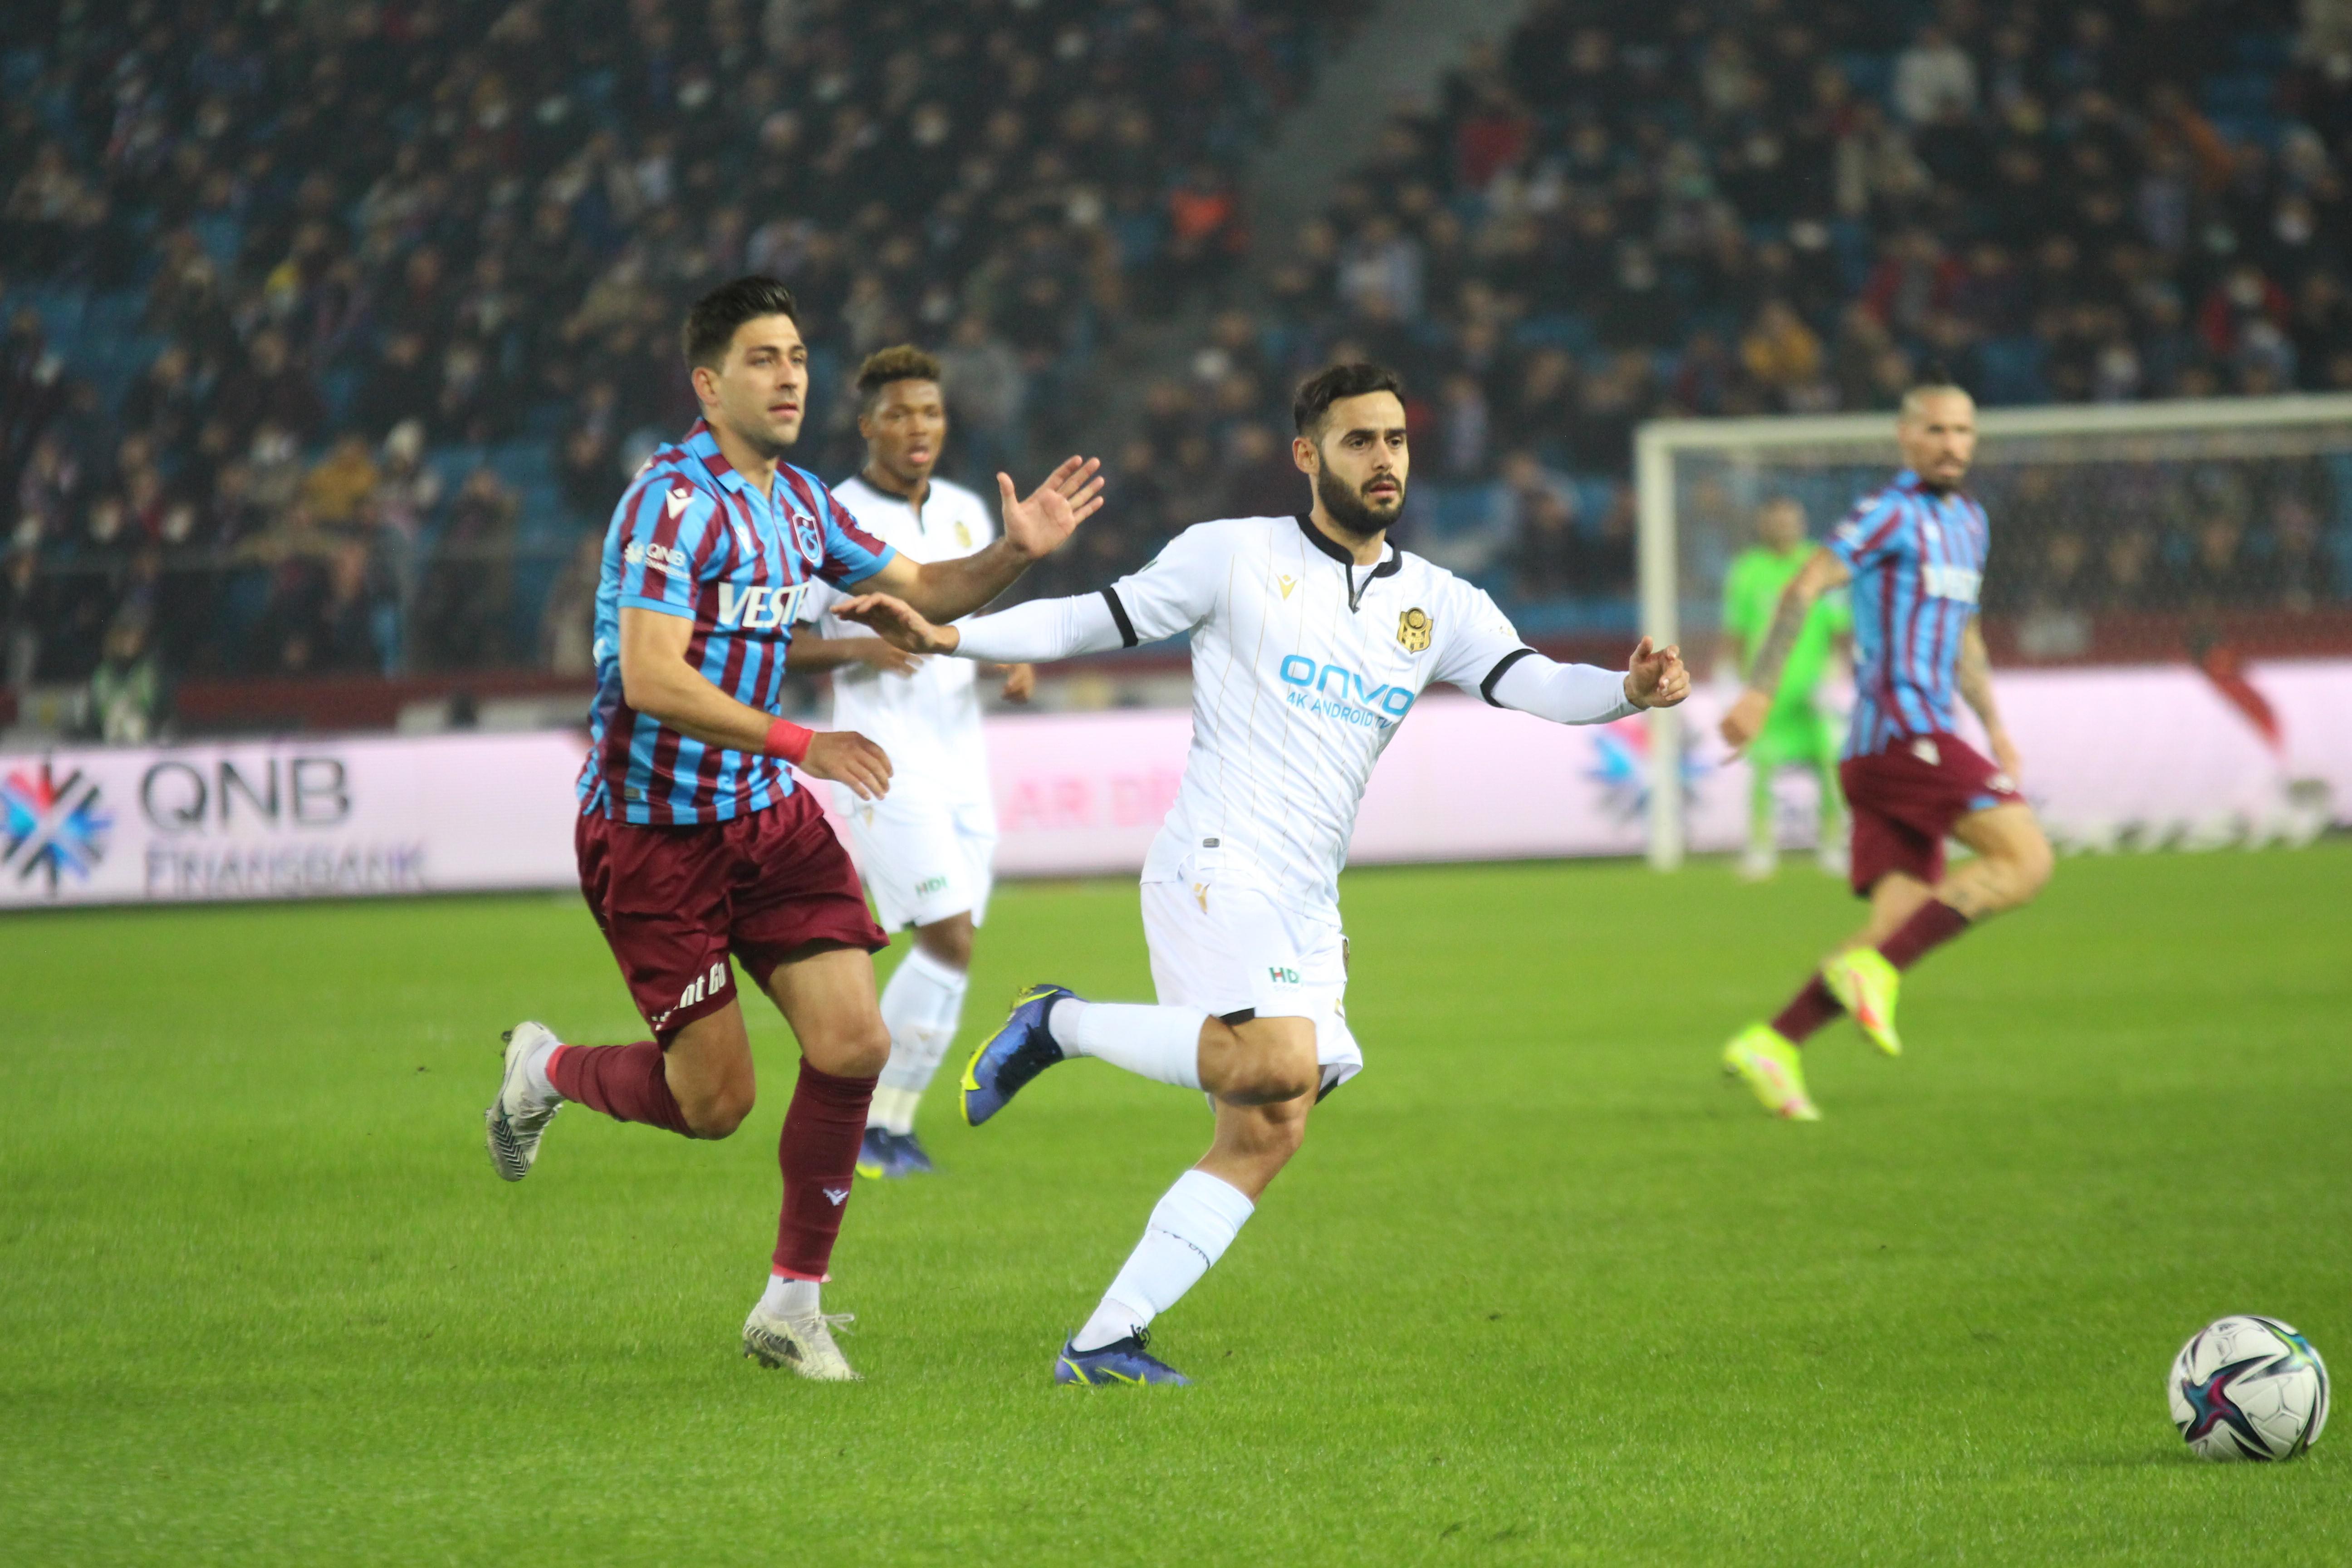 ÖZET) Trabzonspor - Yeni Malatyaspor maç sonucu: 1-0 - Trabzonspor (TS)  Haberleri - Spor